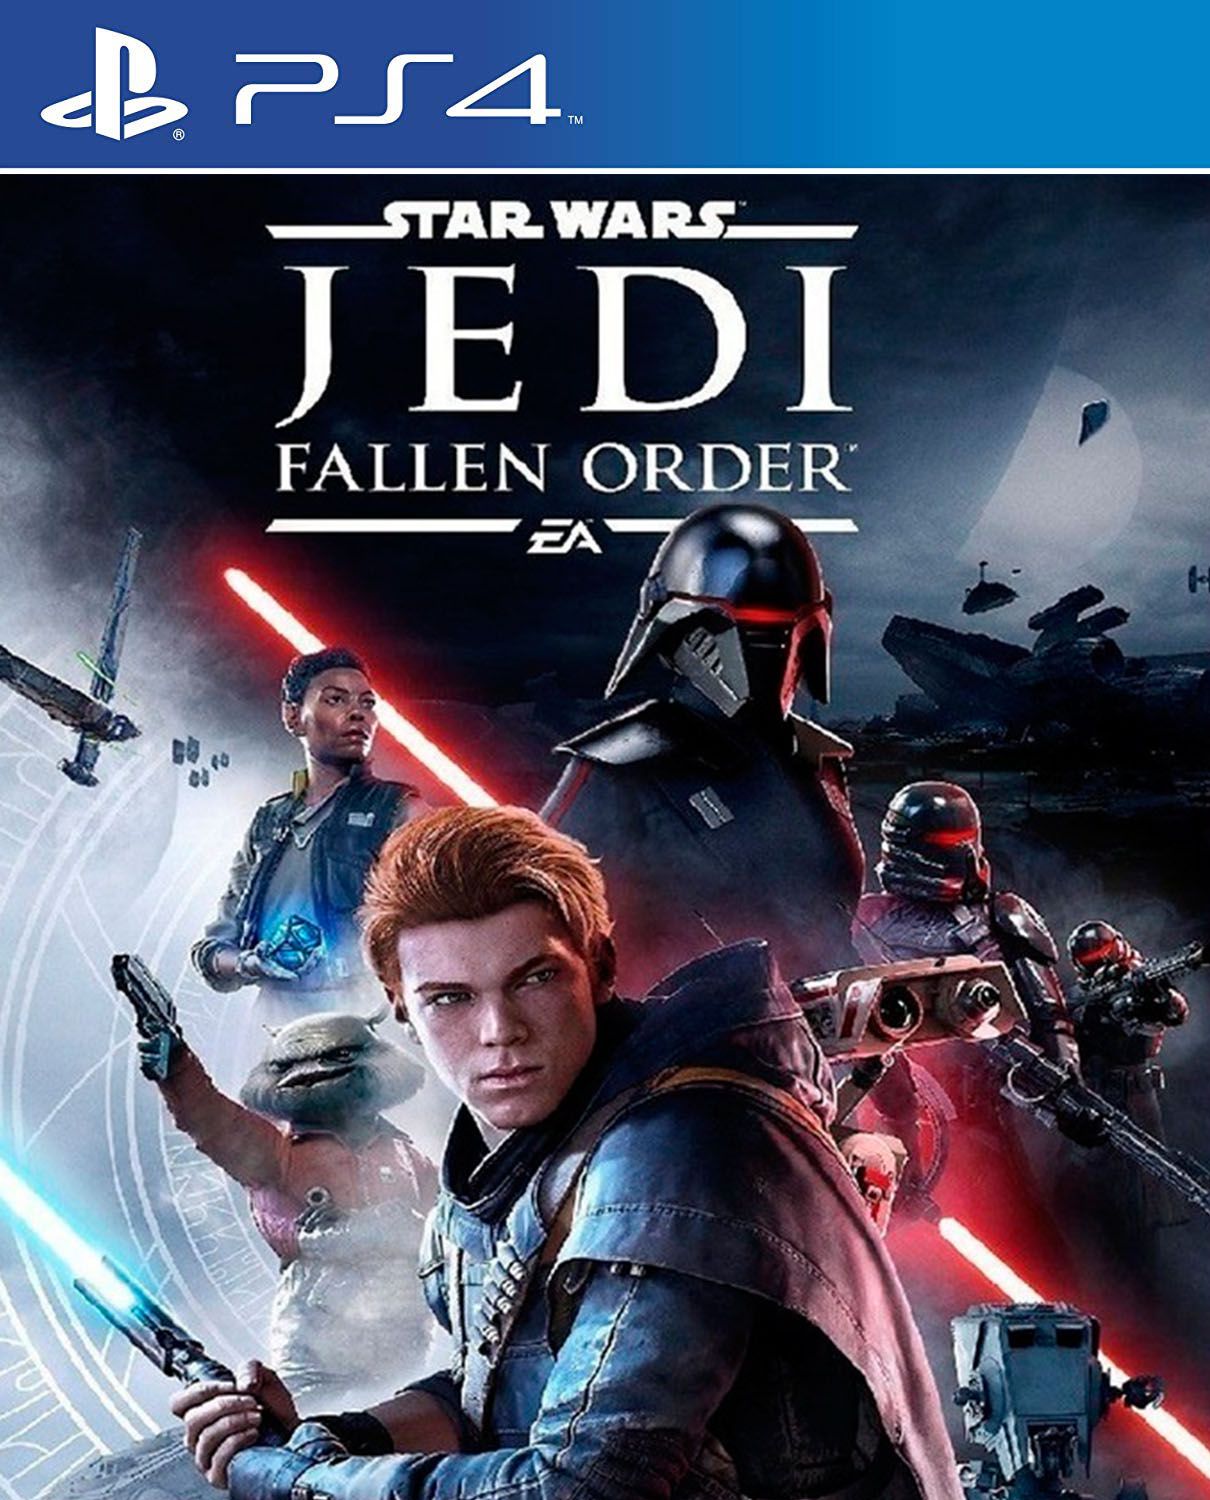 Jogo Star Wars Jedi: Fallen Order